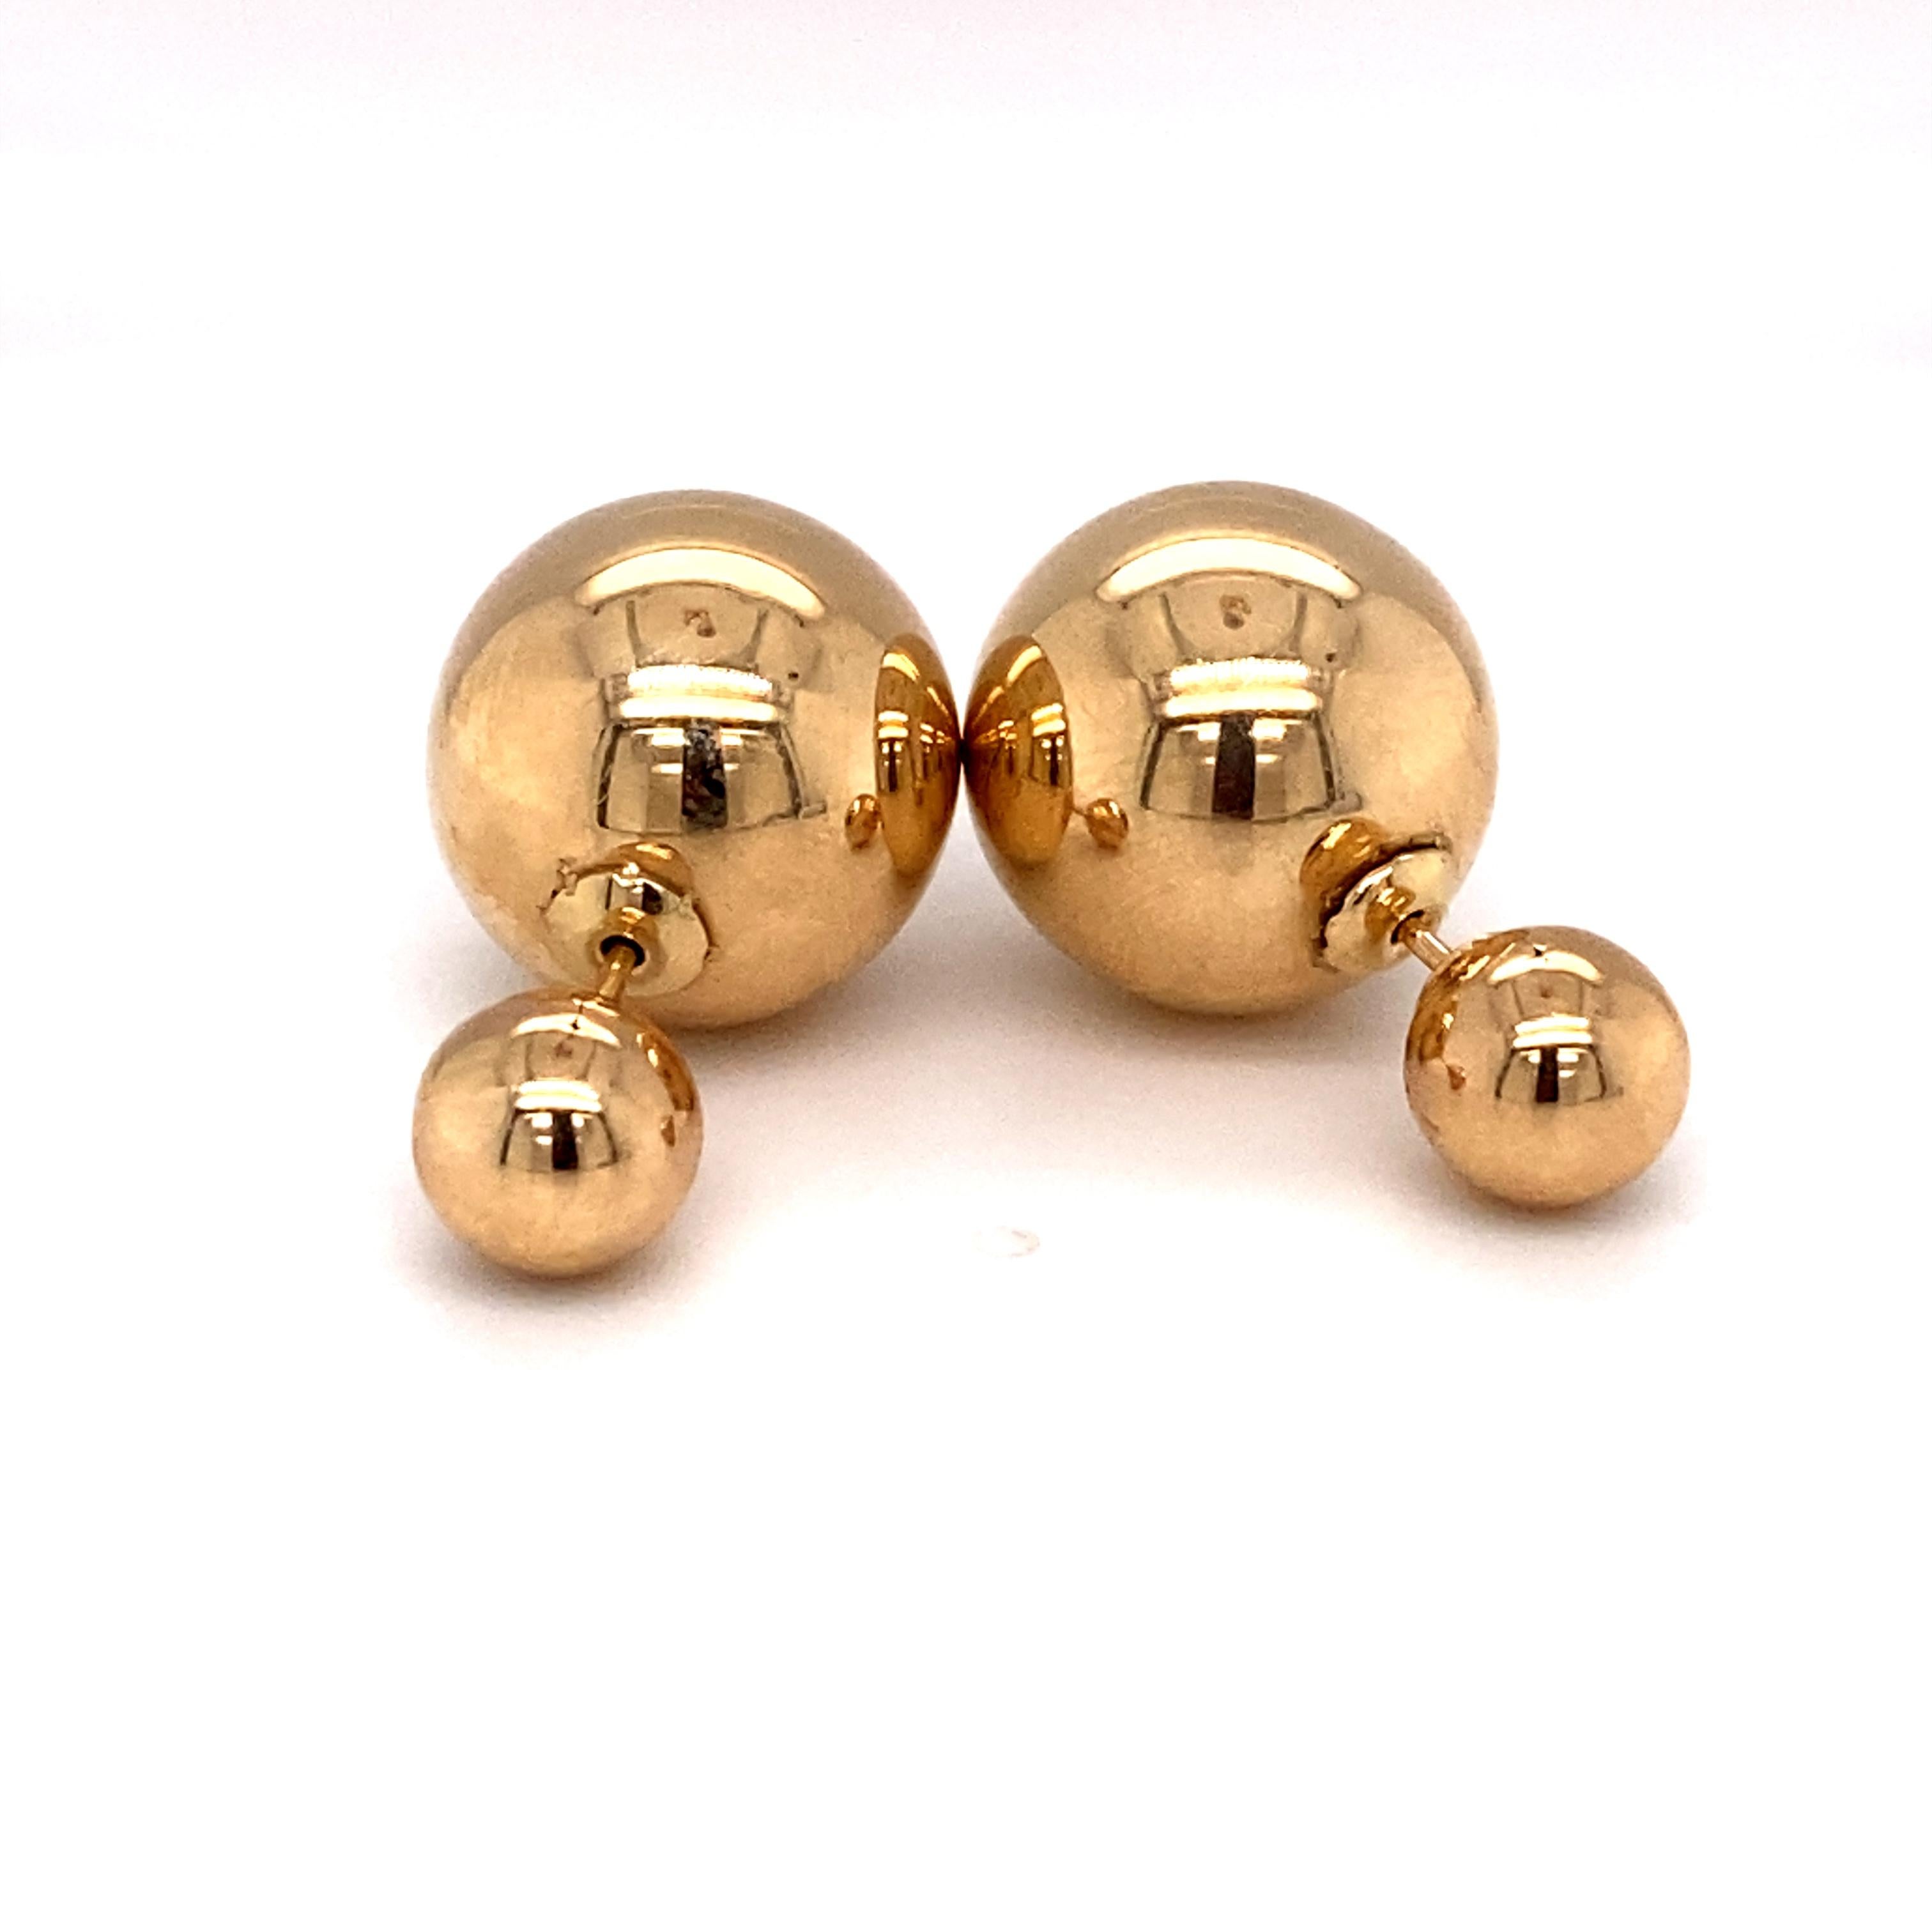 double ball earrings